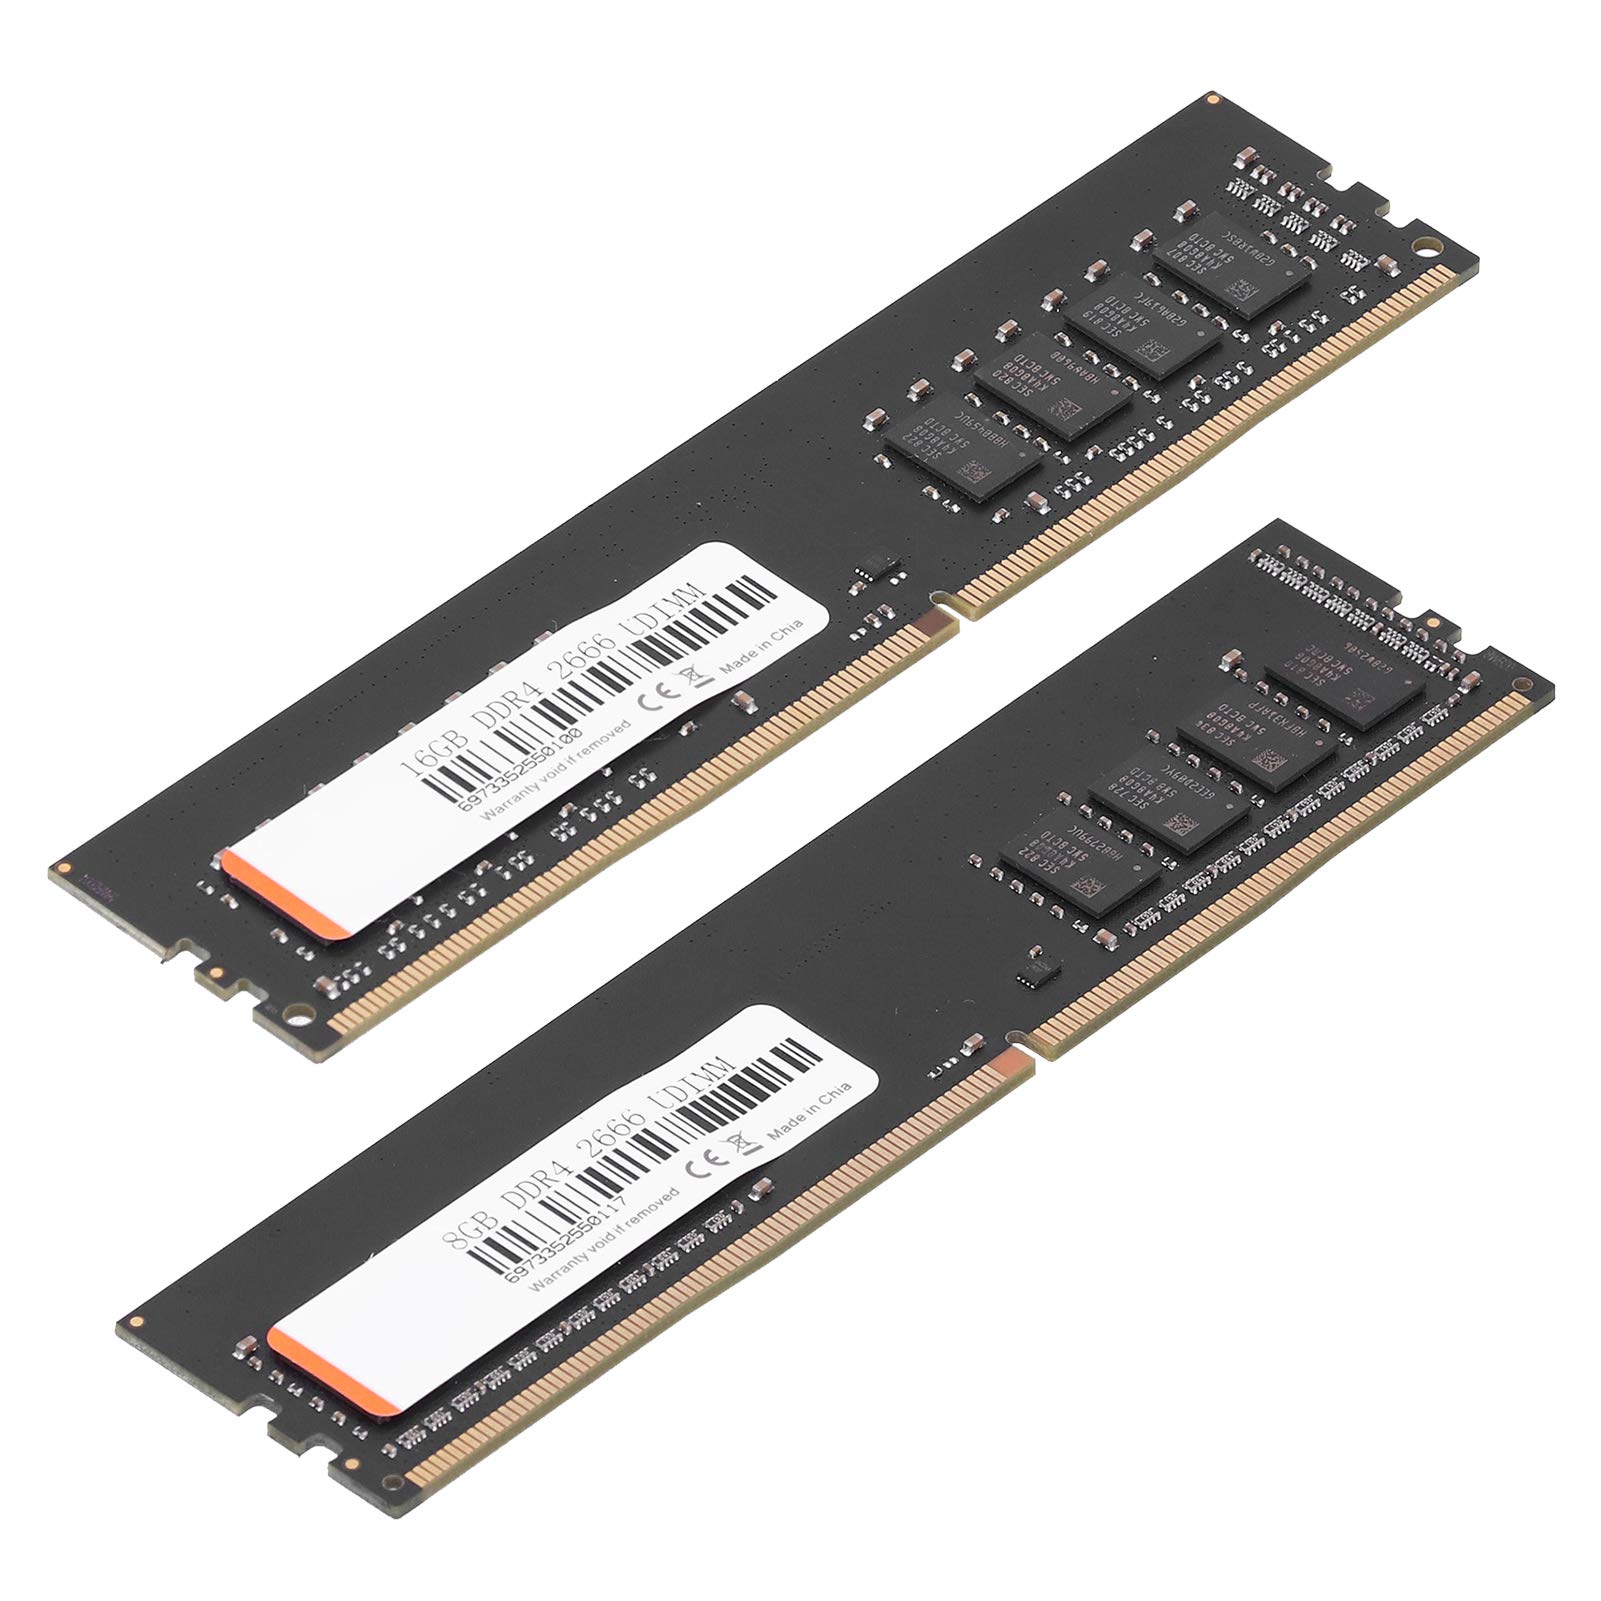 RAM memory sticks